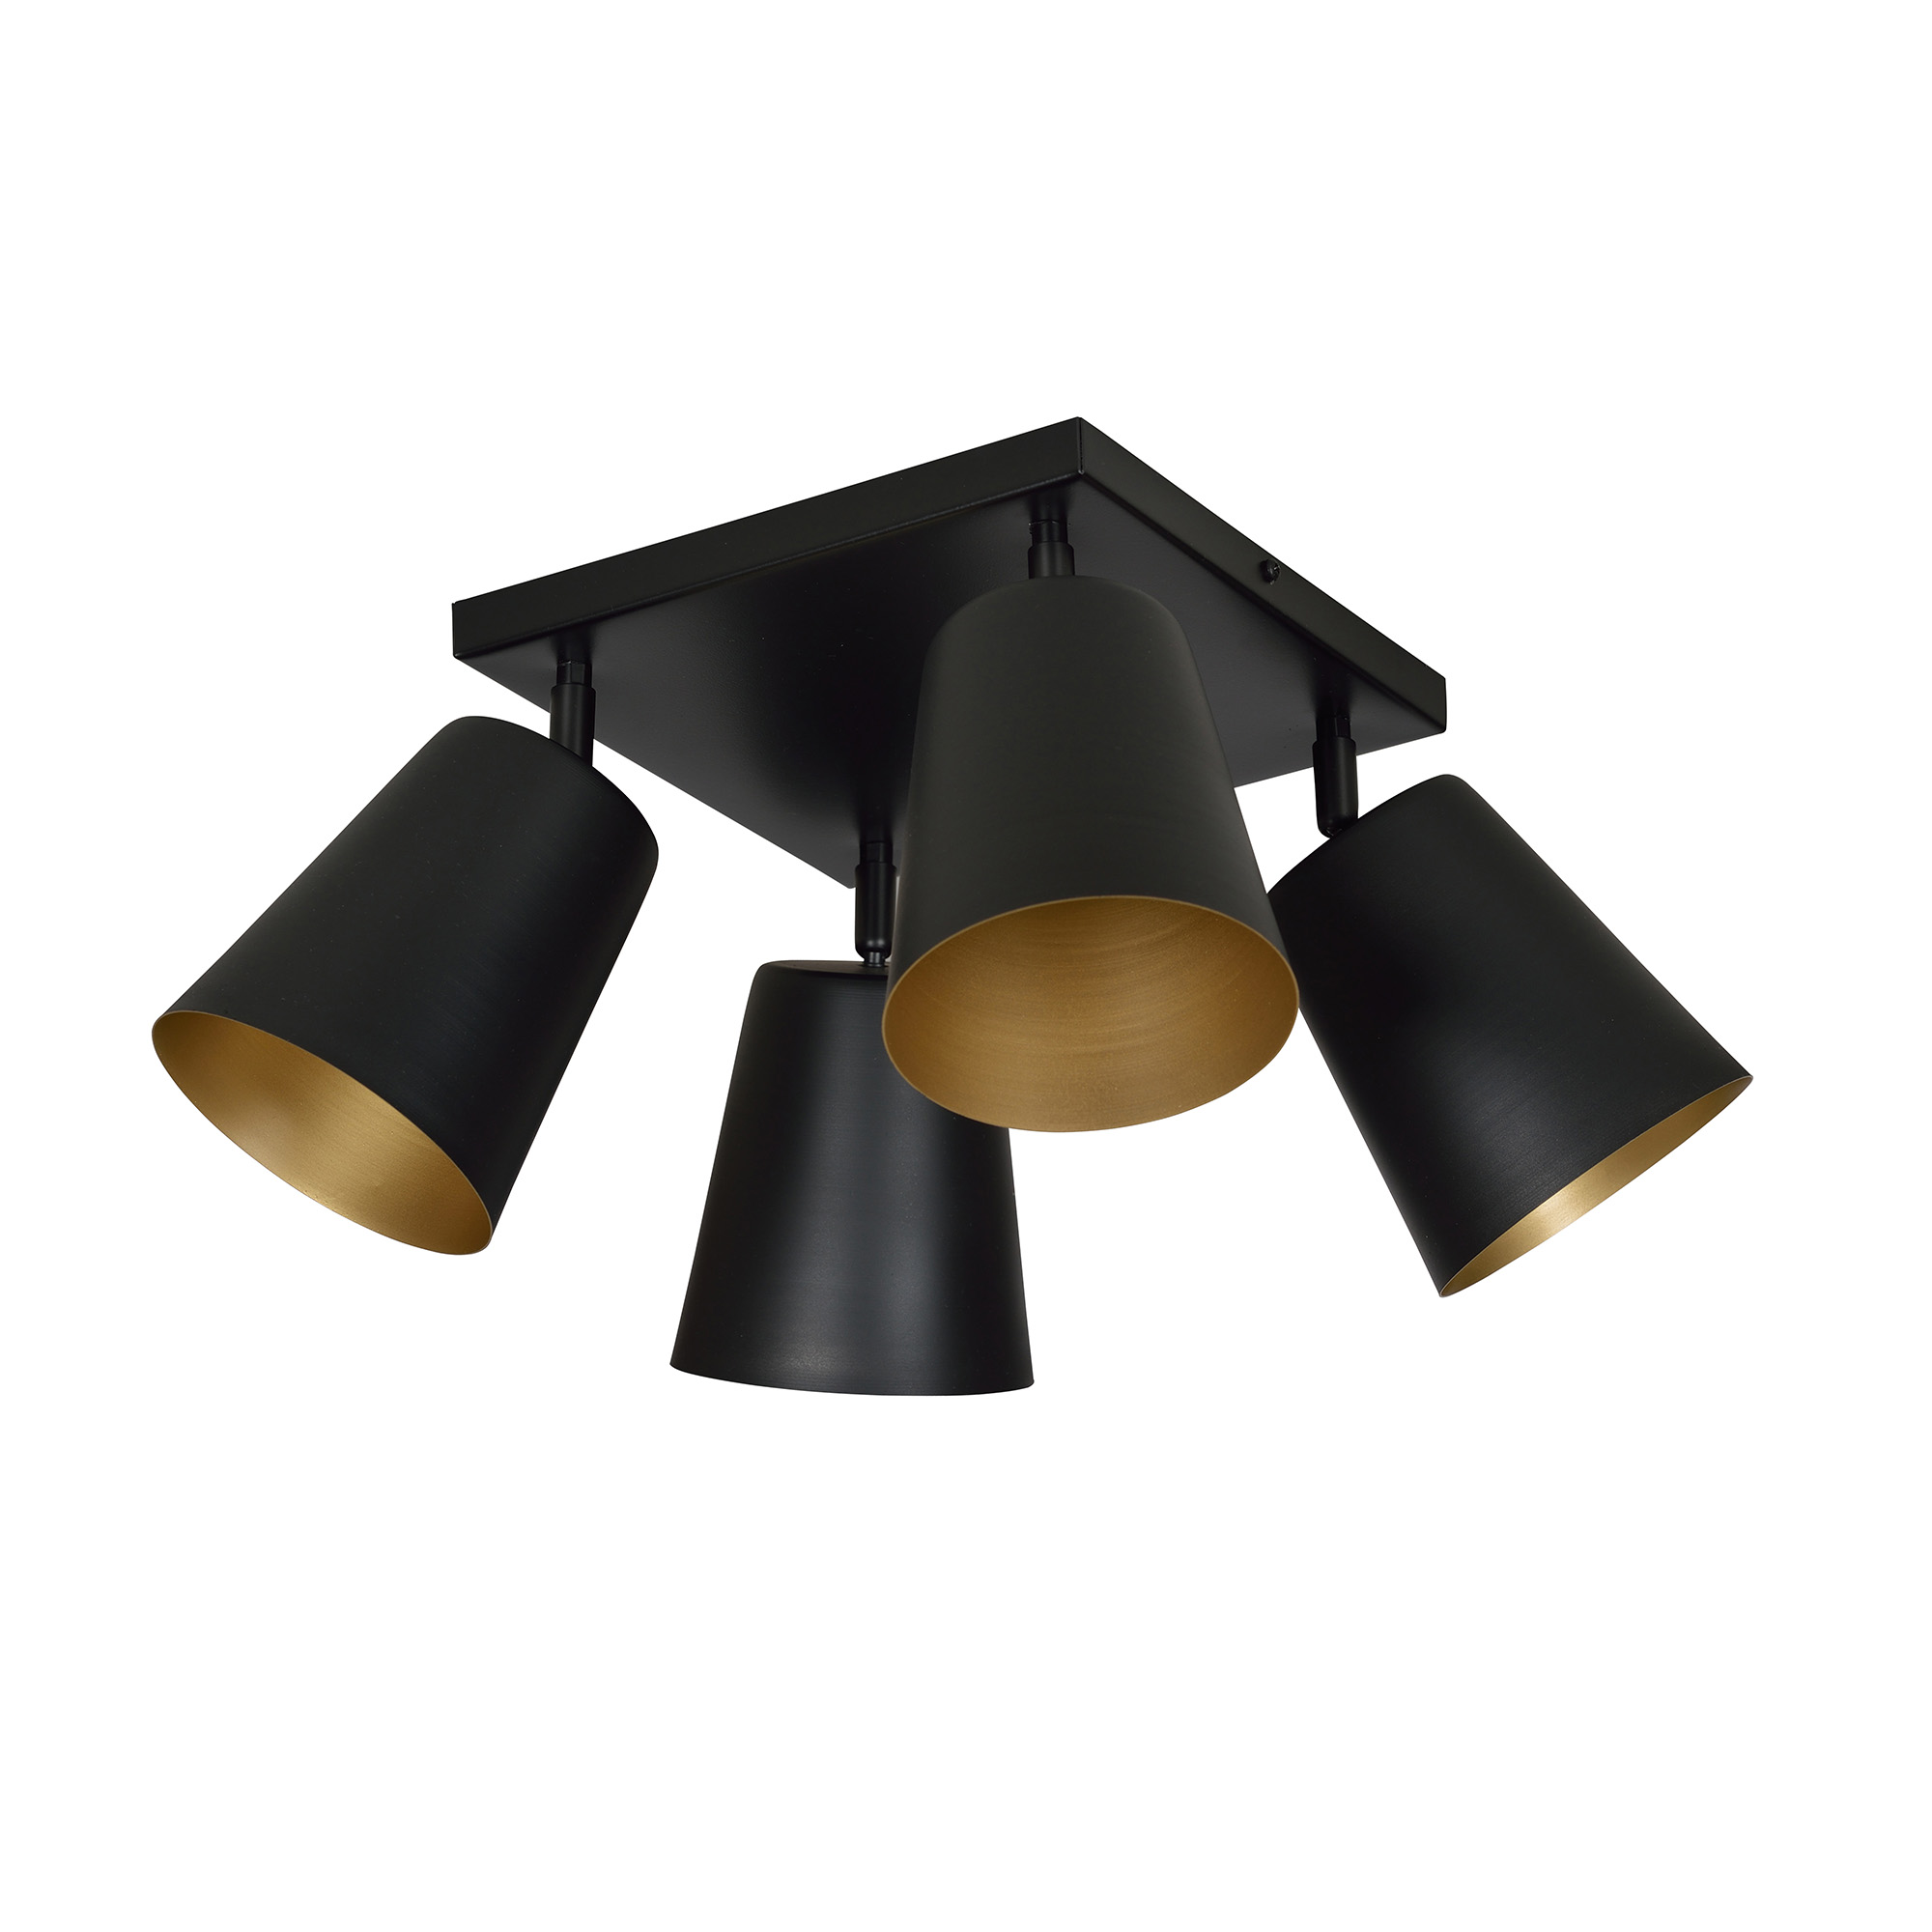 Deckenlampe flexibel Schwarz Gold 4-flammig 4x E27